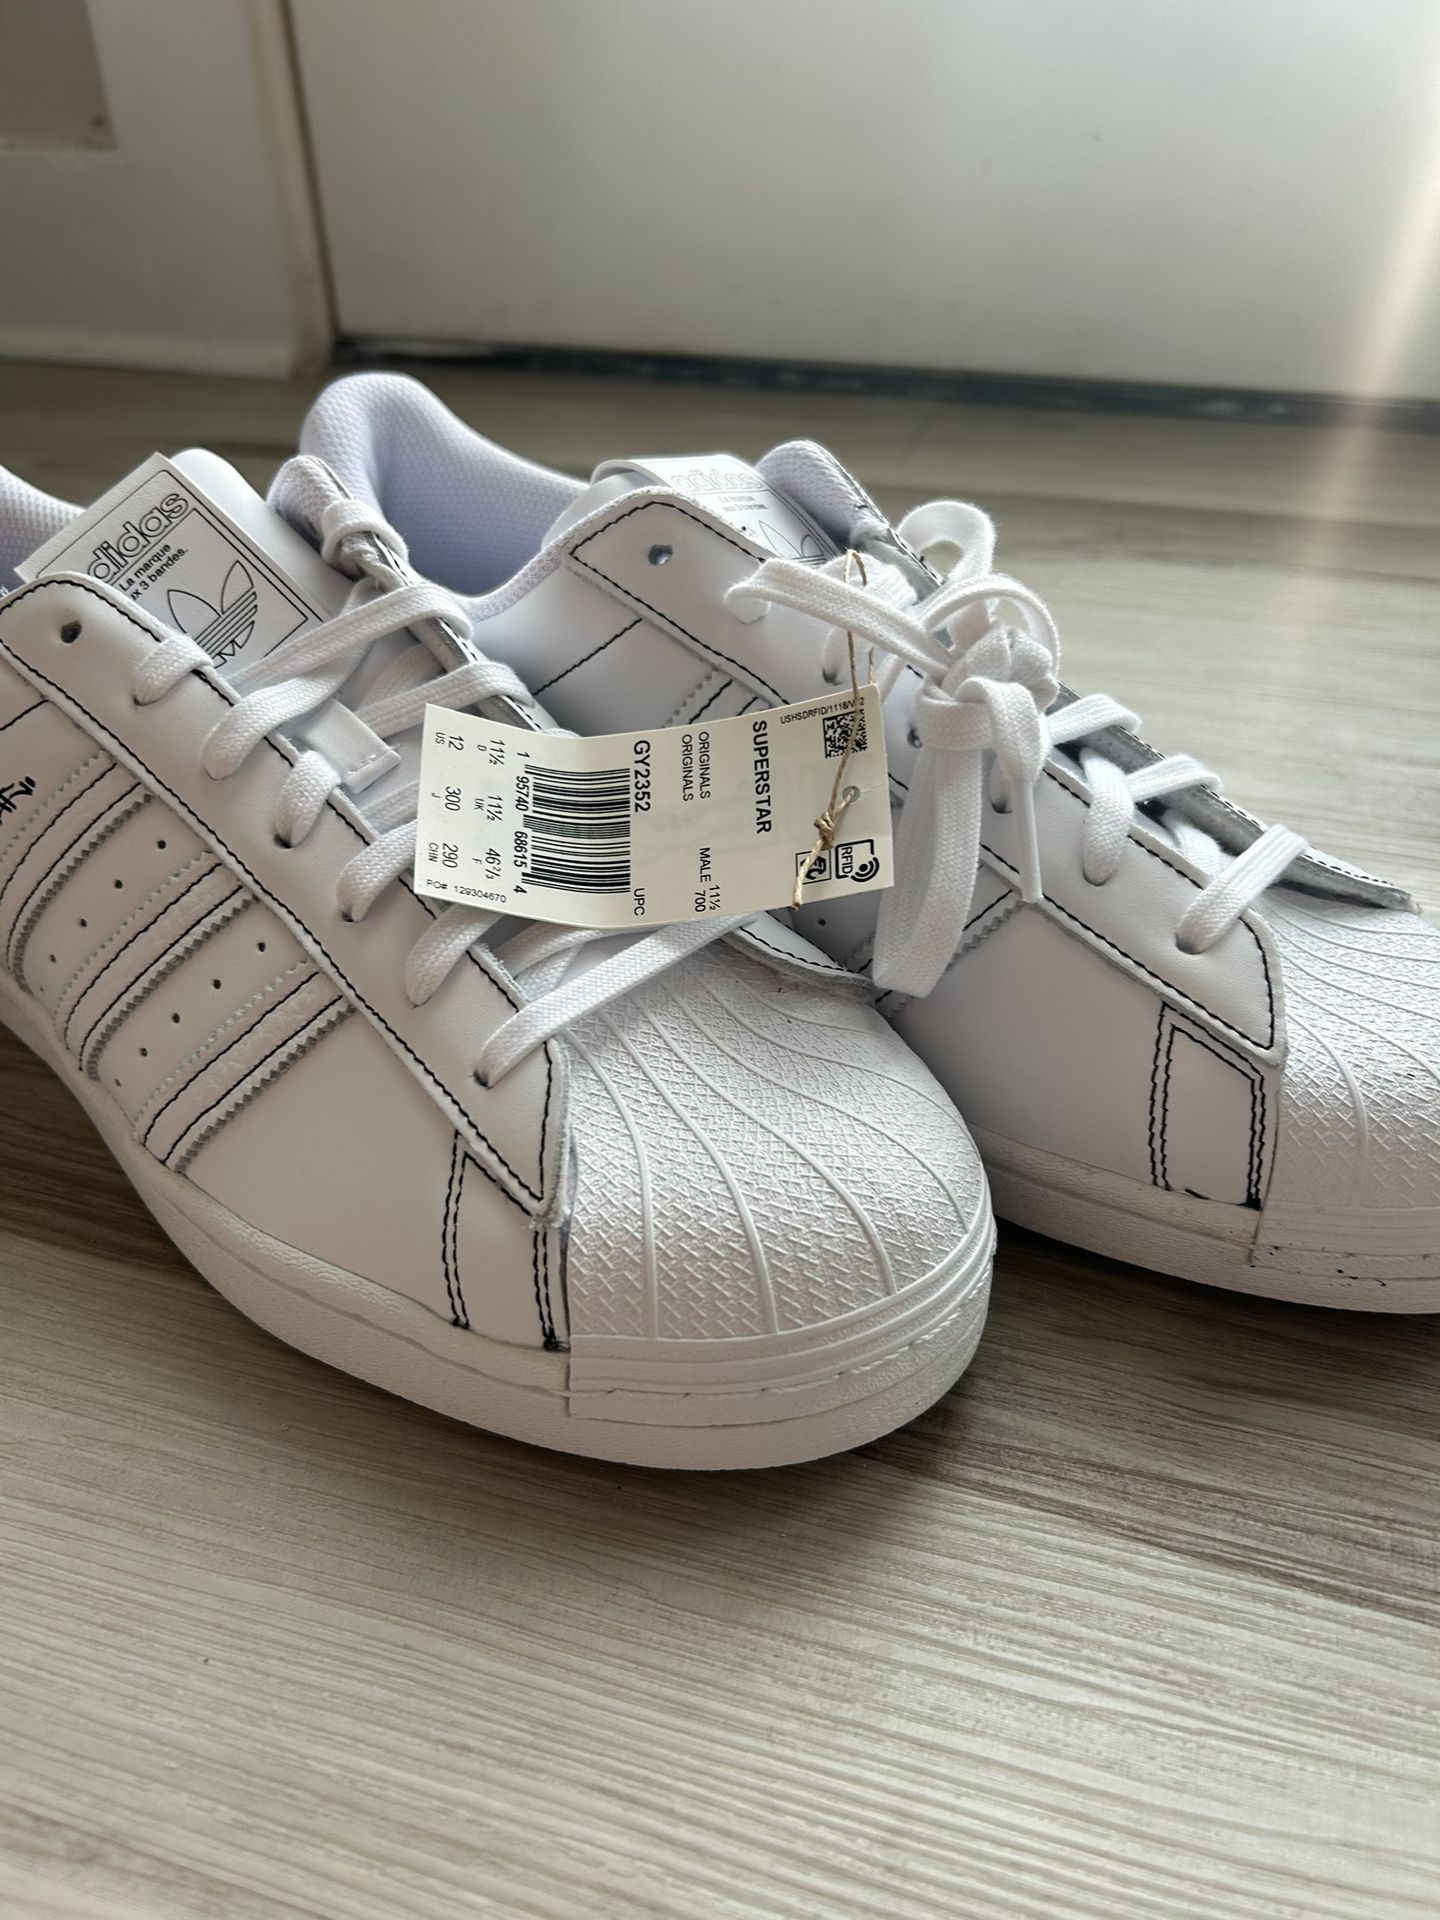 Adidas Shoes Size 12